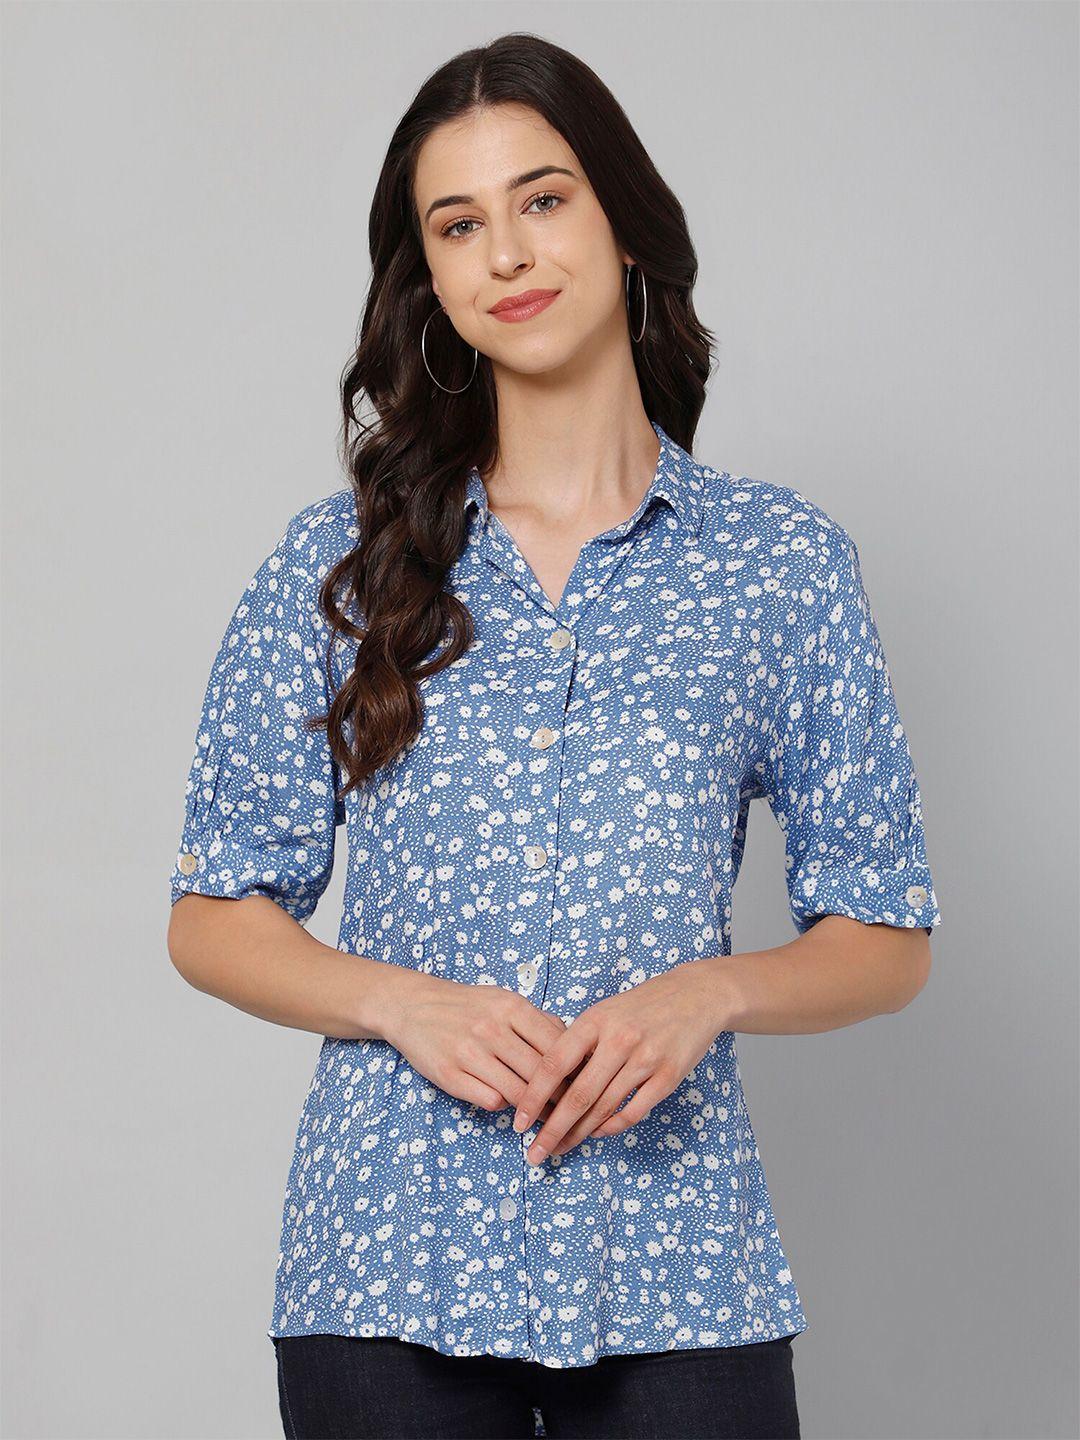 cantabil-women-blue-&-white-floral-print-shirt-style-top